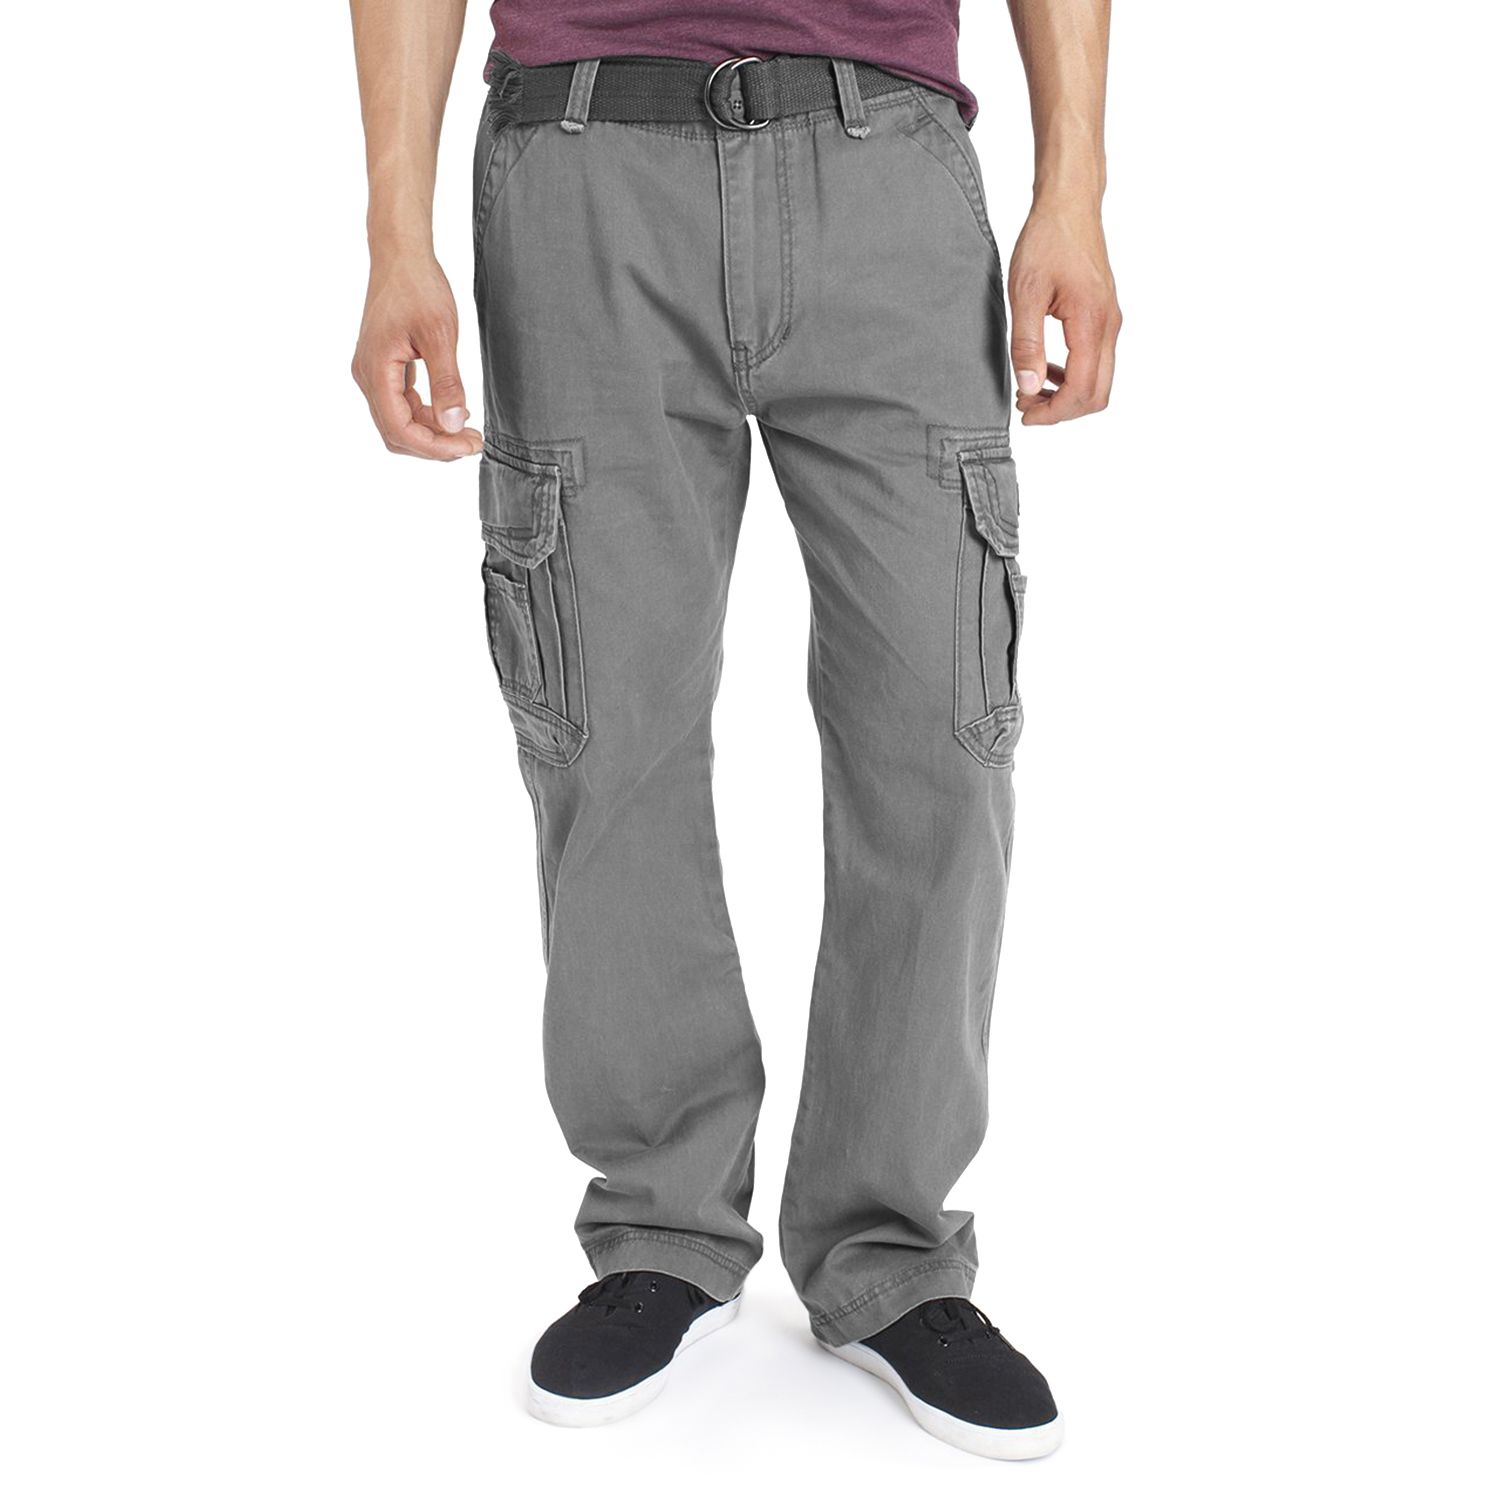 gray cargo pants mens